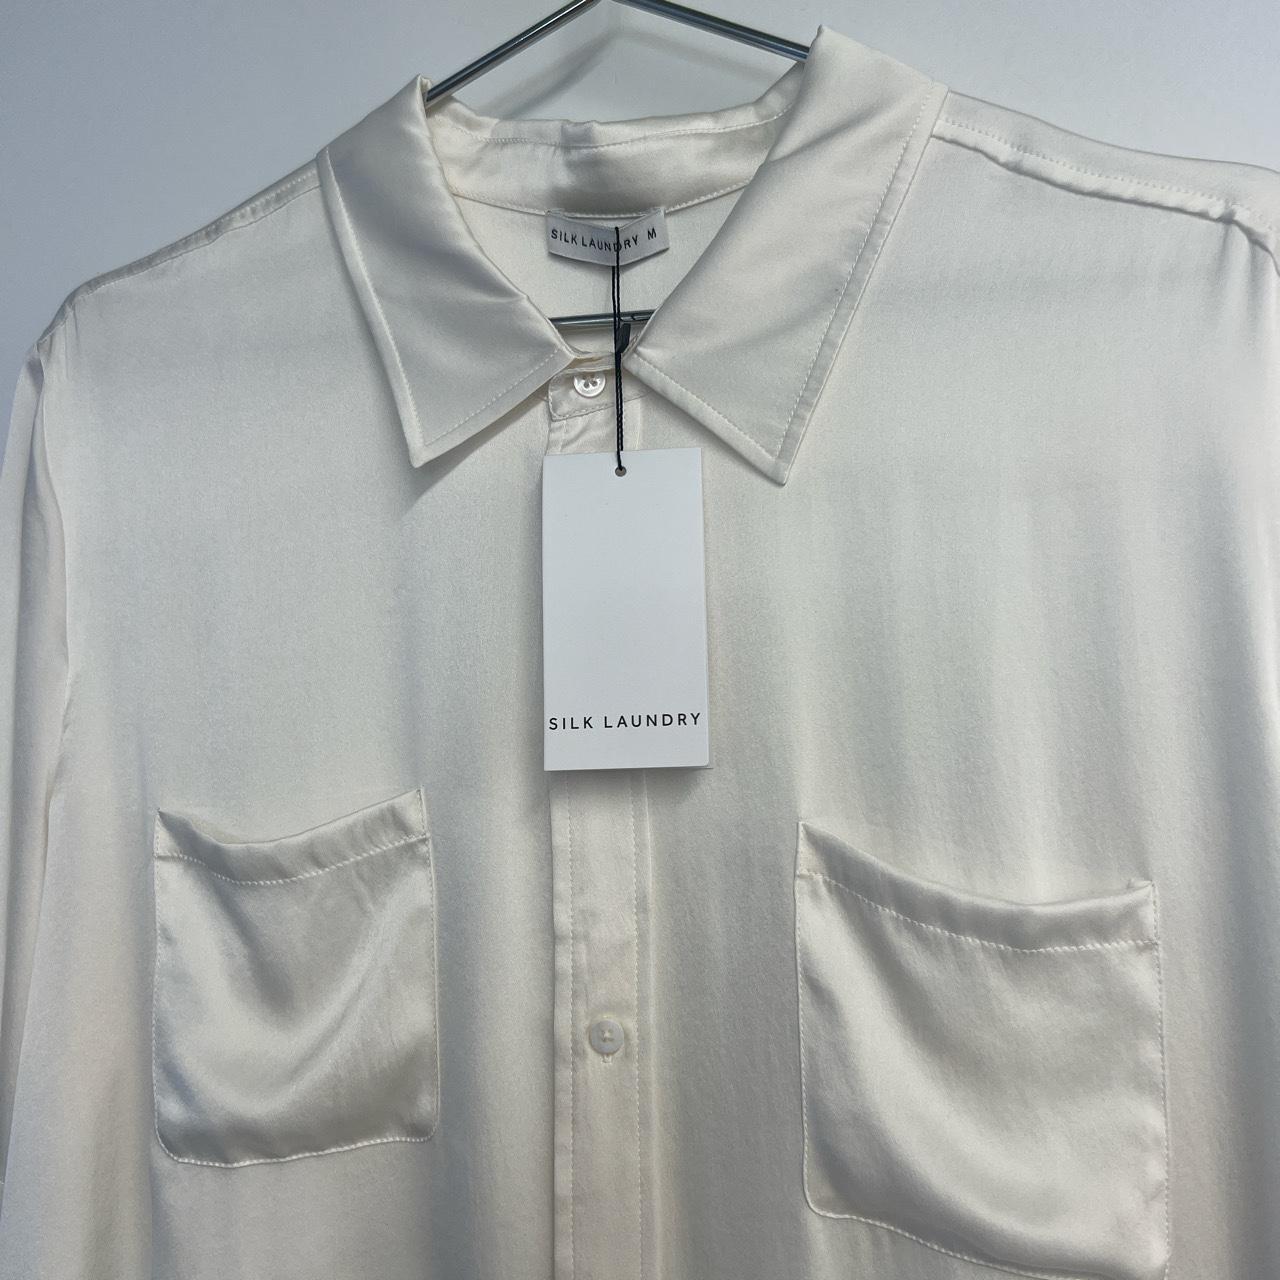 Silk laundry white 100% silk shirt brand new rrp 320 - Depop